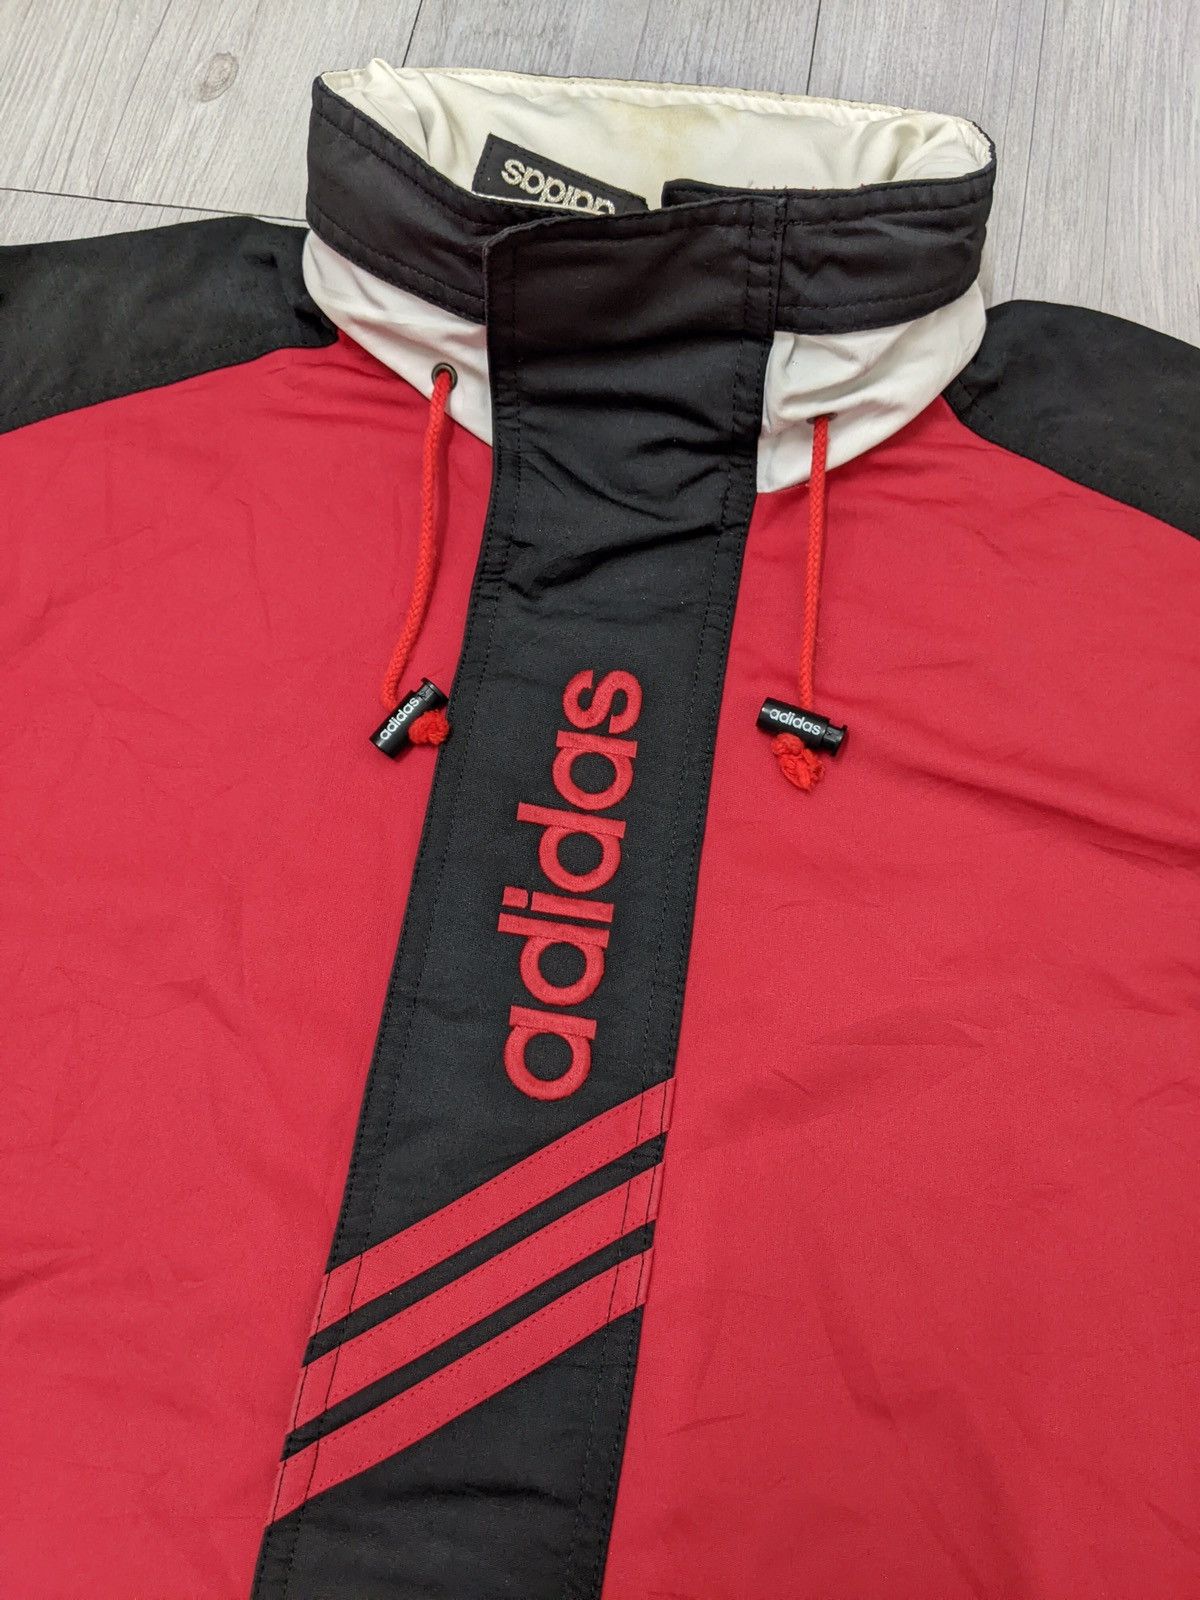 Adidas Vtg 90s Adidas Stripe Hooded Jacket Size US M / EU 48-50 / 2 - 6 Thumbnail